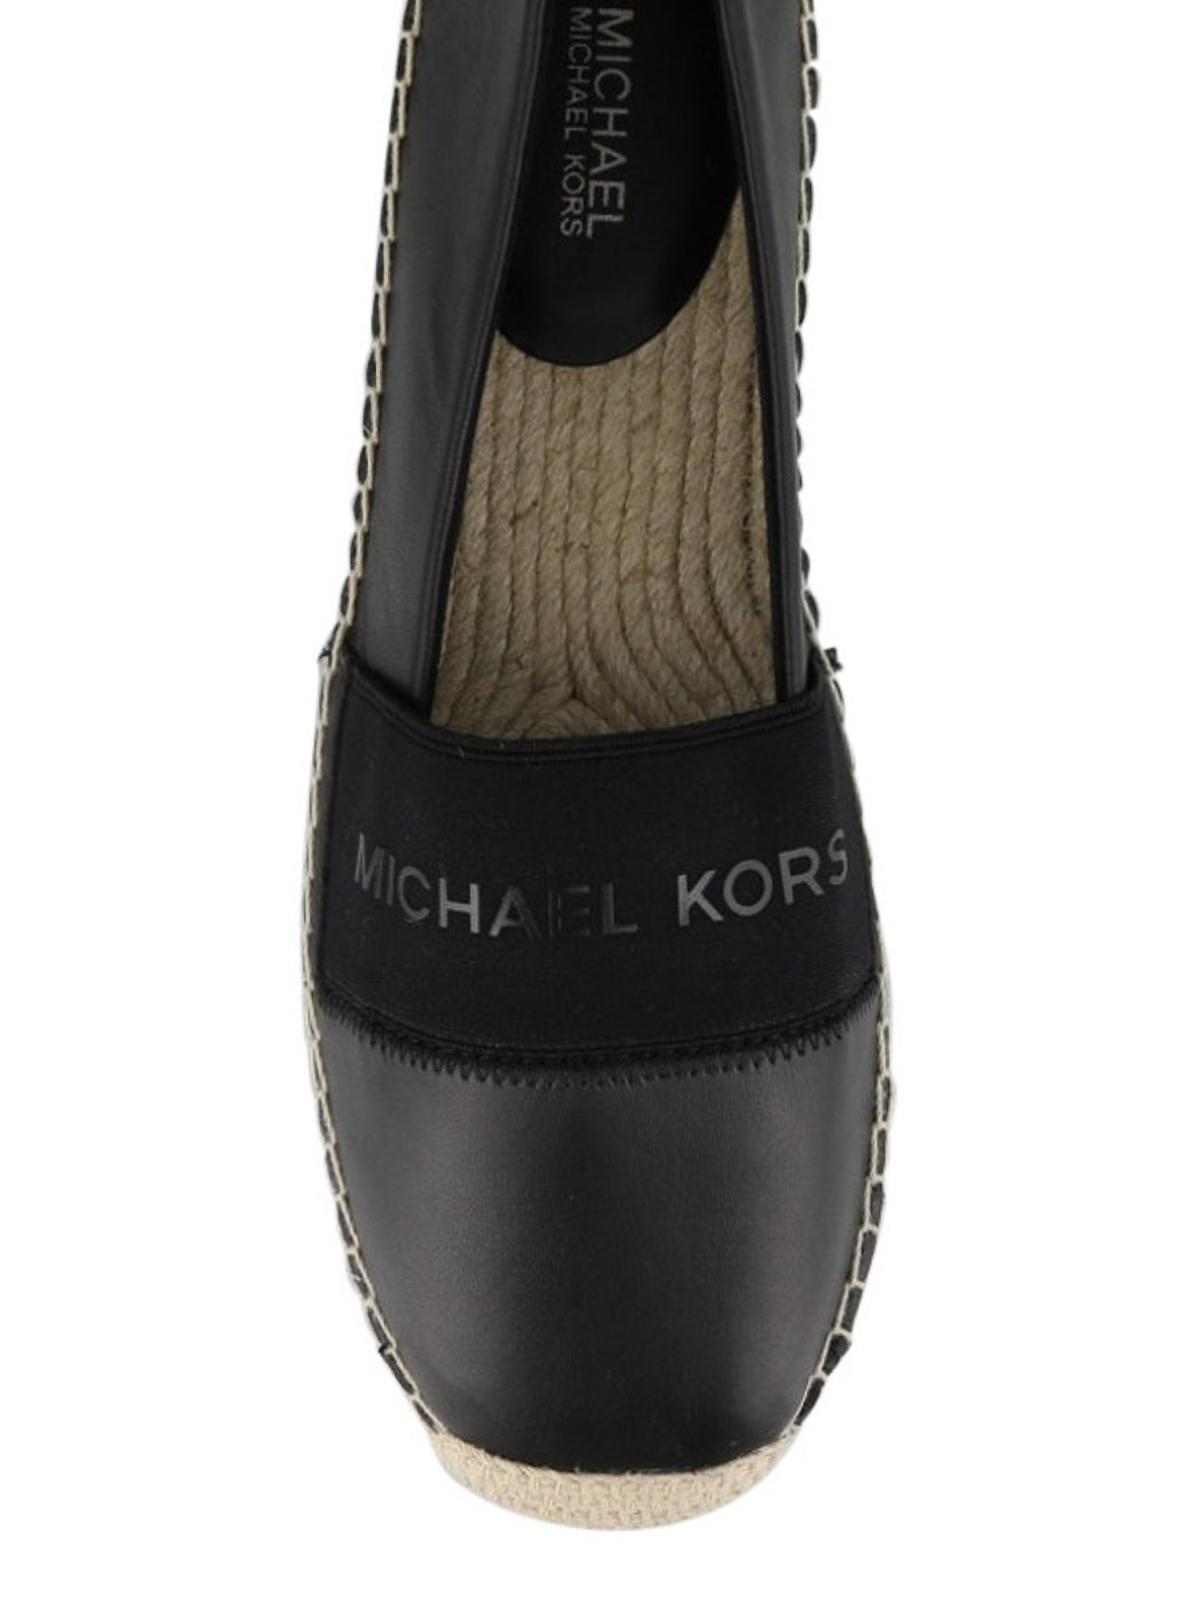 Michael Kors - Vicky black leather 